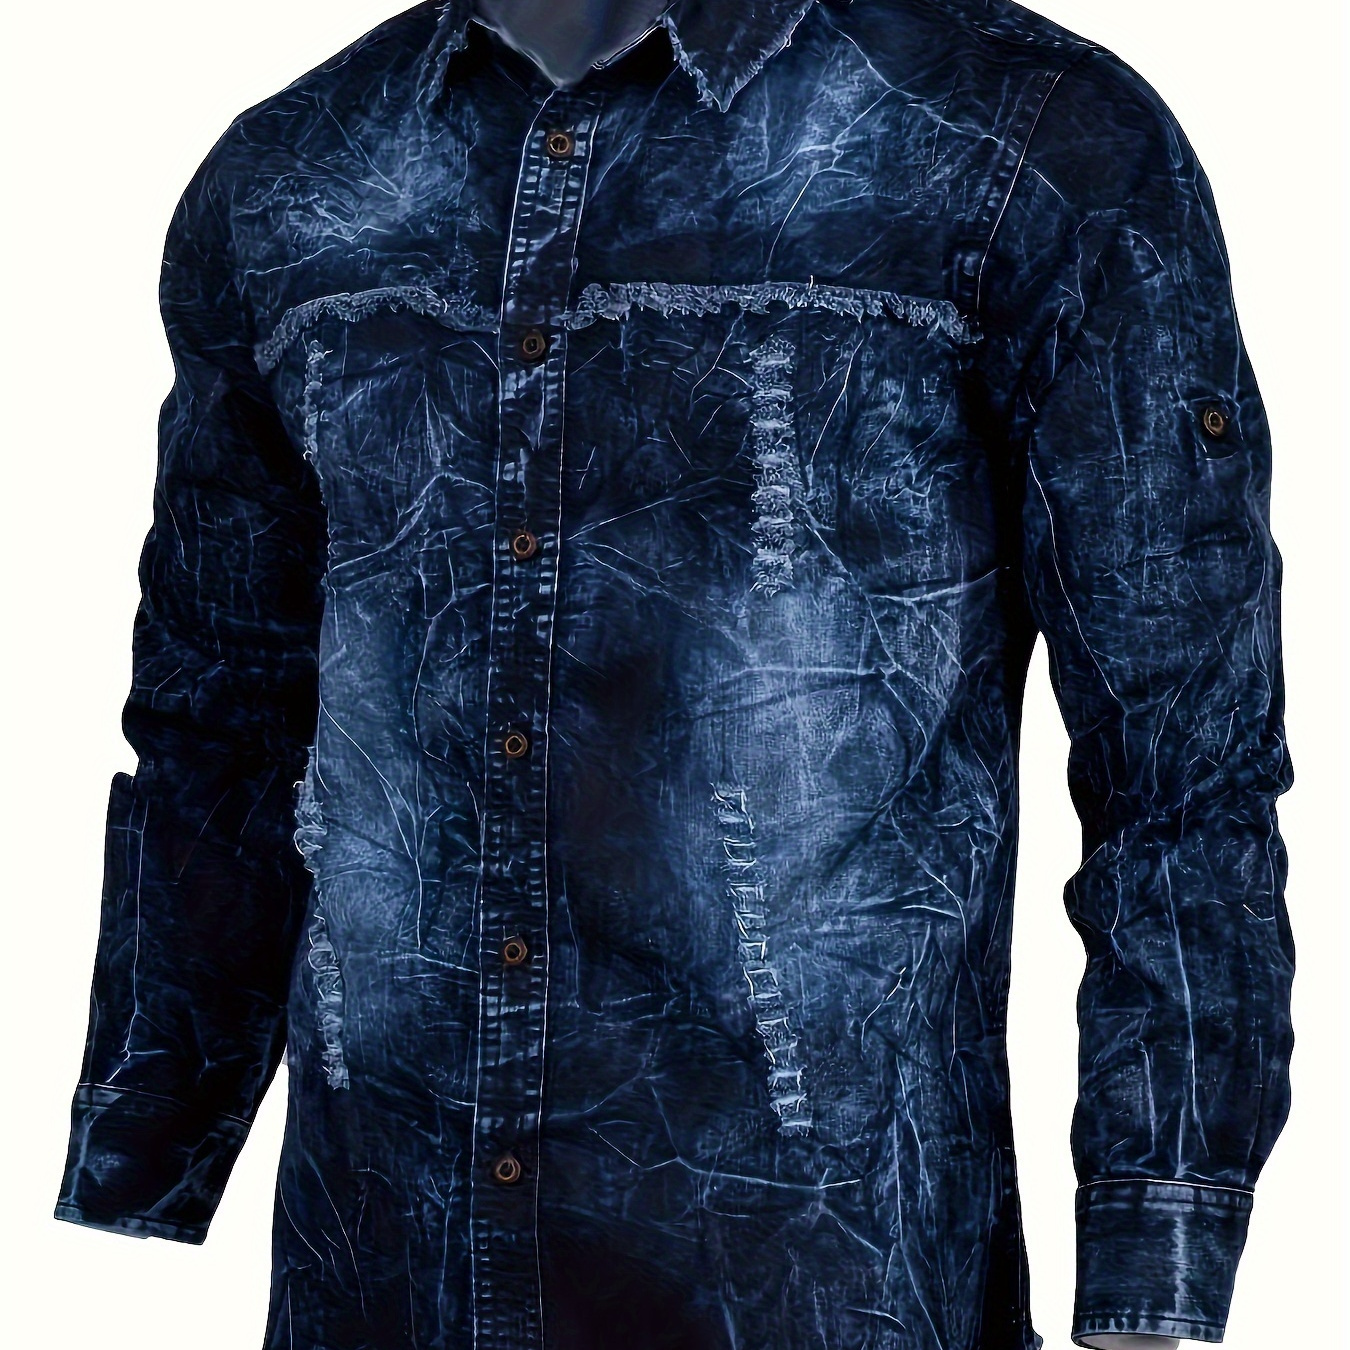 

Men's Tie Dye Frayed Denim Shirt, Casual Lapel Button Up Cotton Blend Slim-fit Long Sleeve Shirt For Outdoor Activities